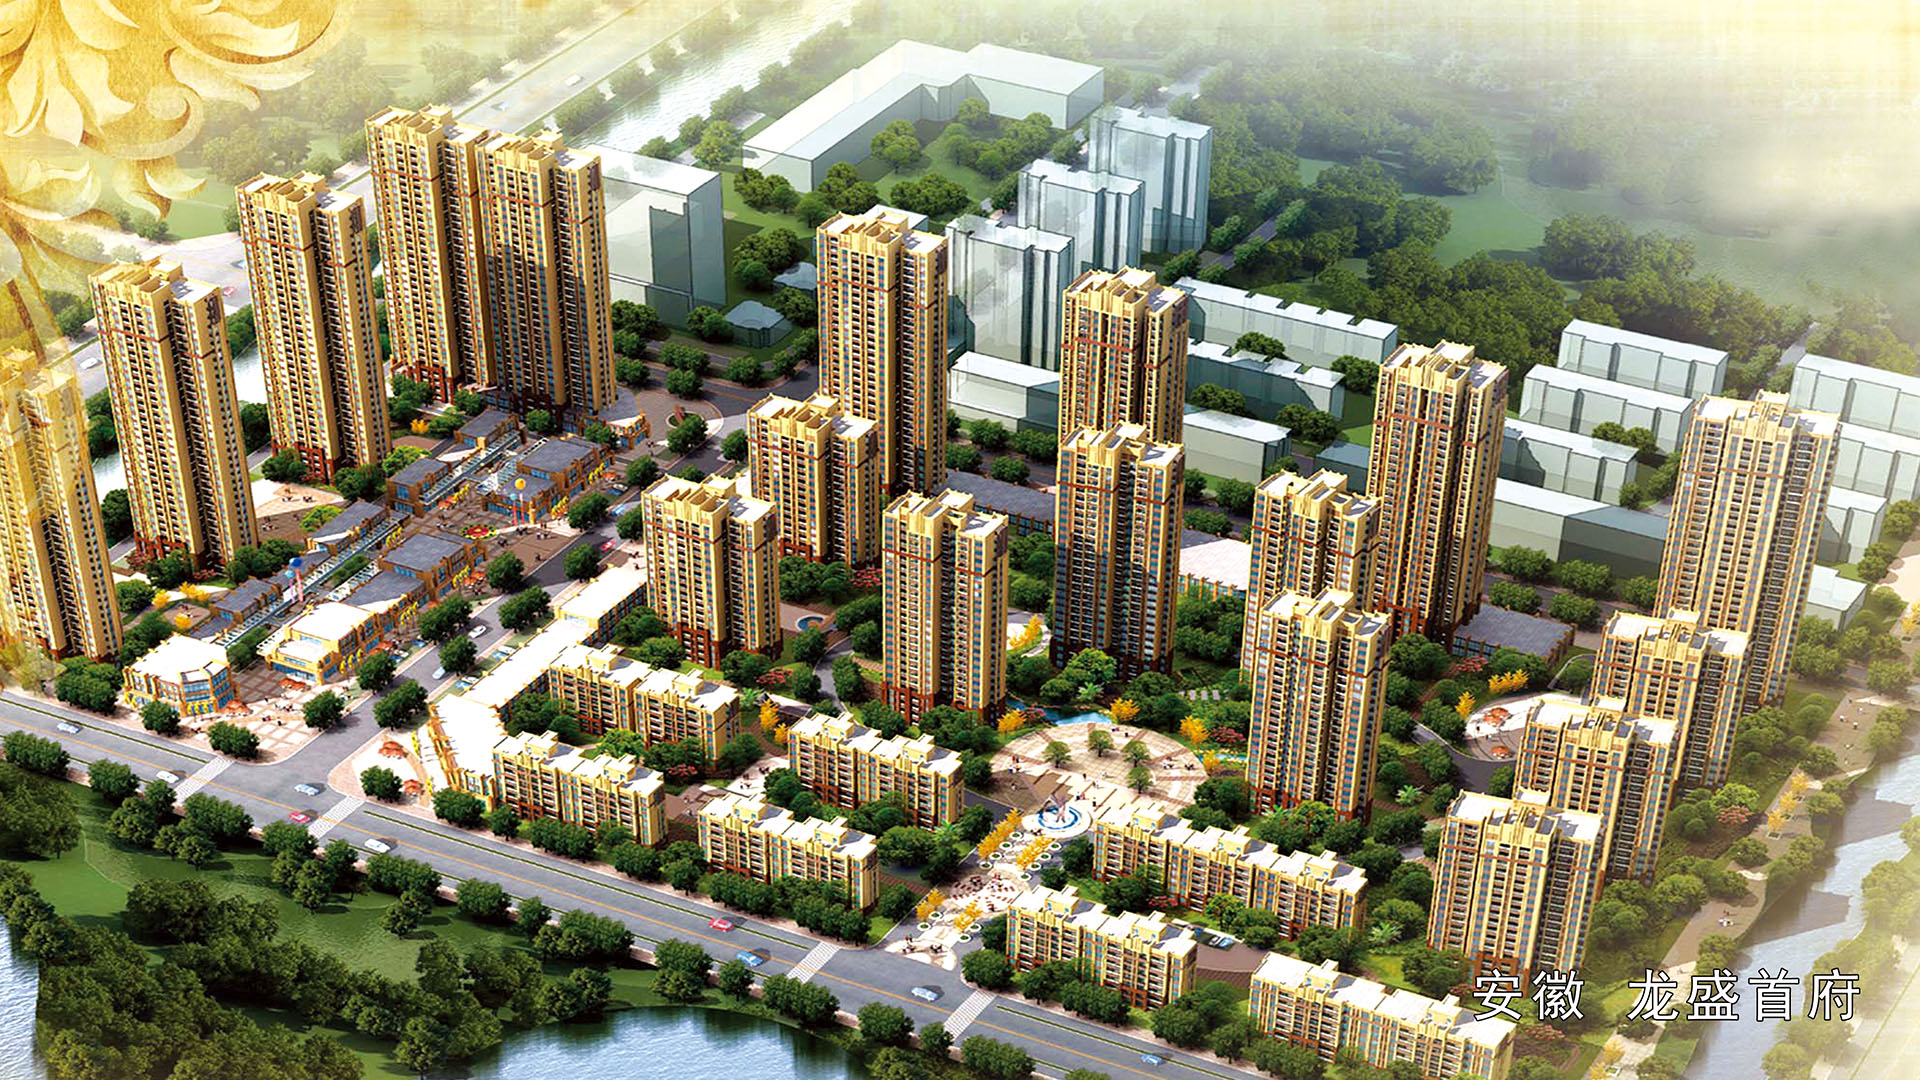 Anhui Longsheng capital